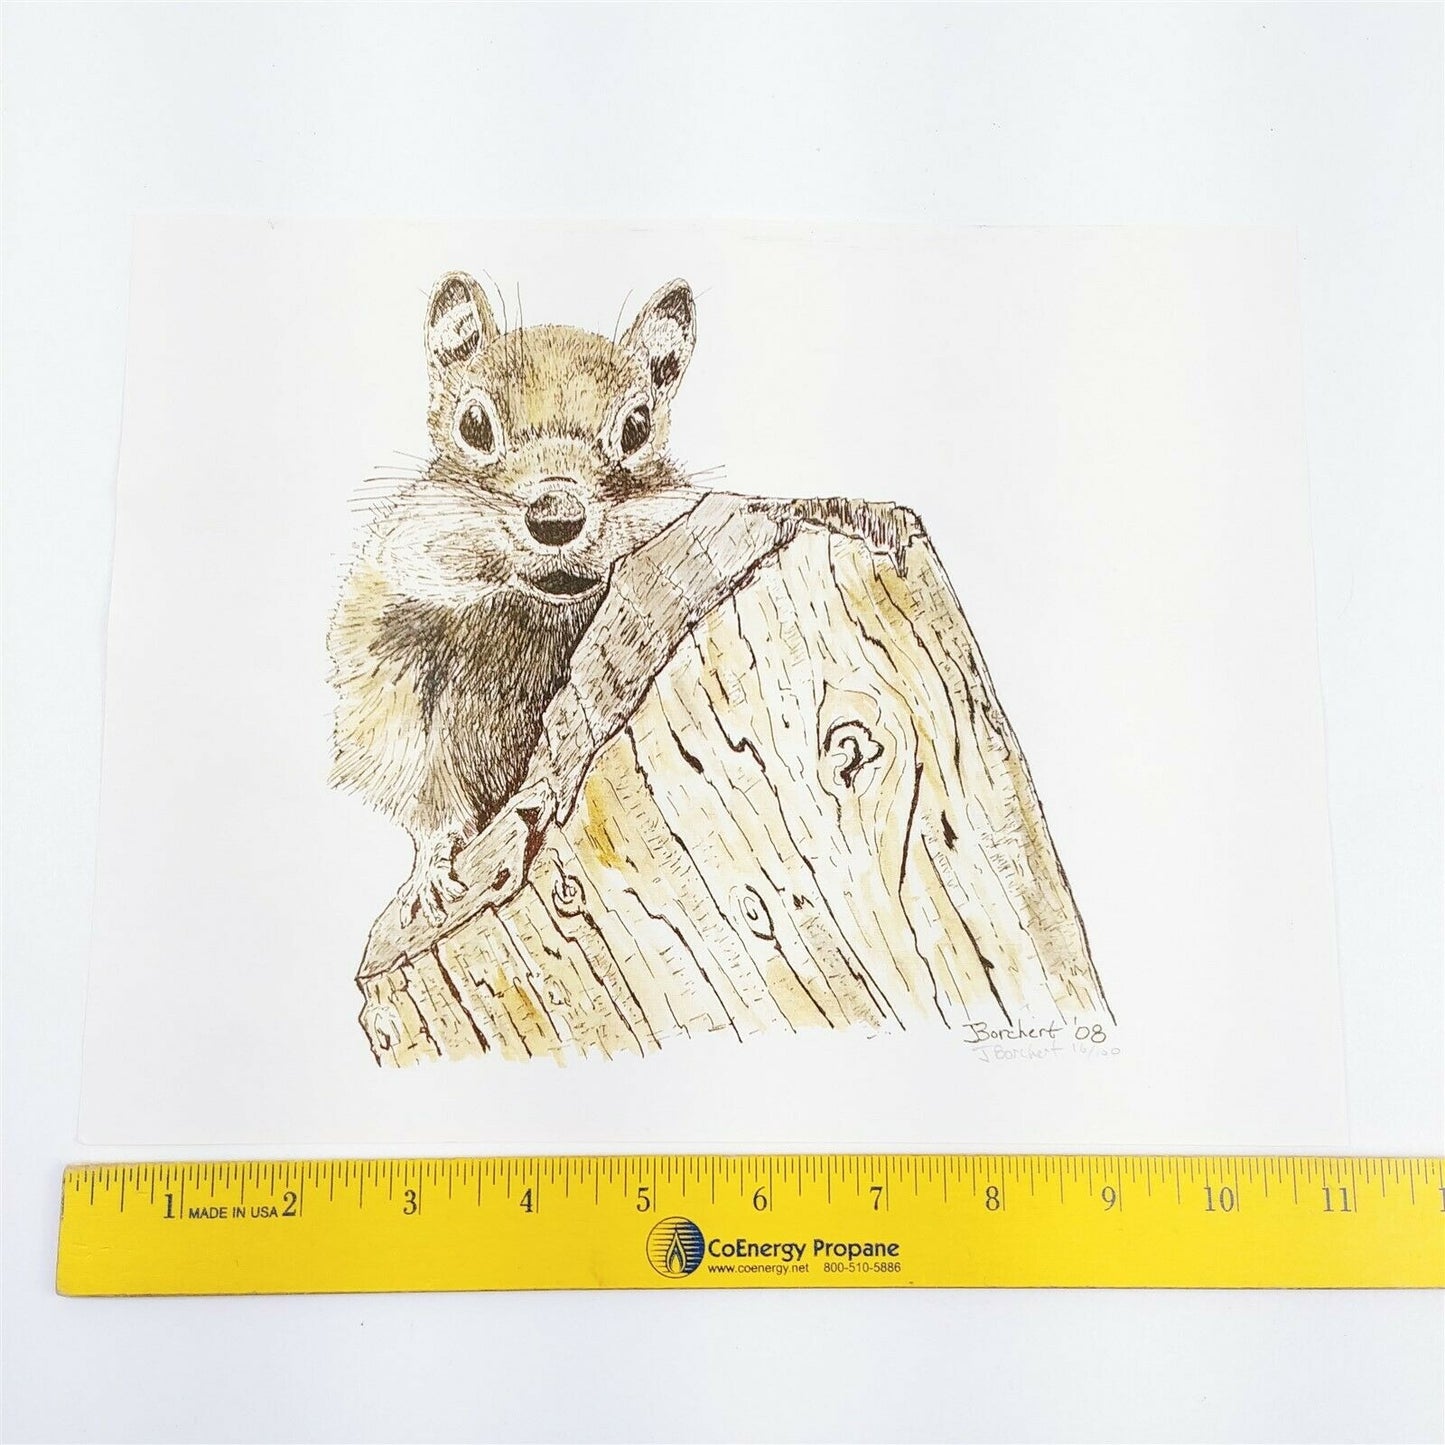 J Borchert 2008 Signed 16/100 Squirrel Print